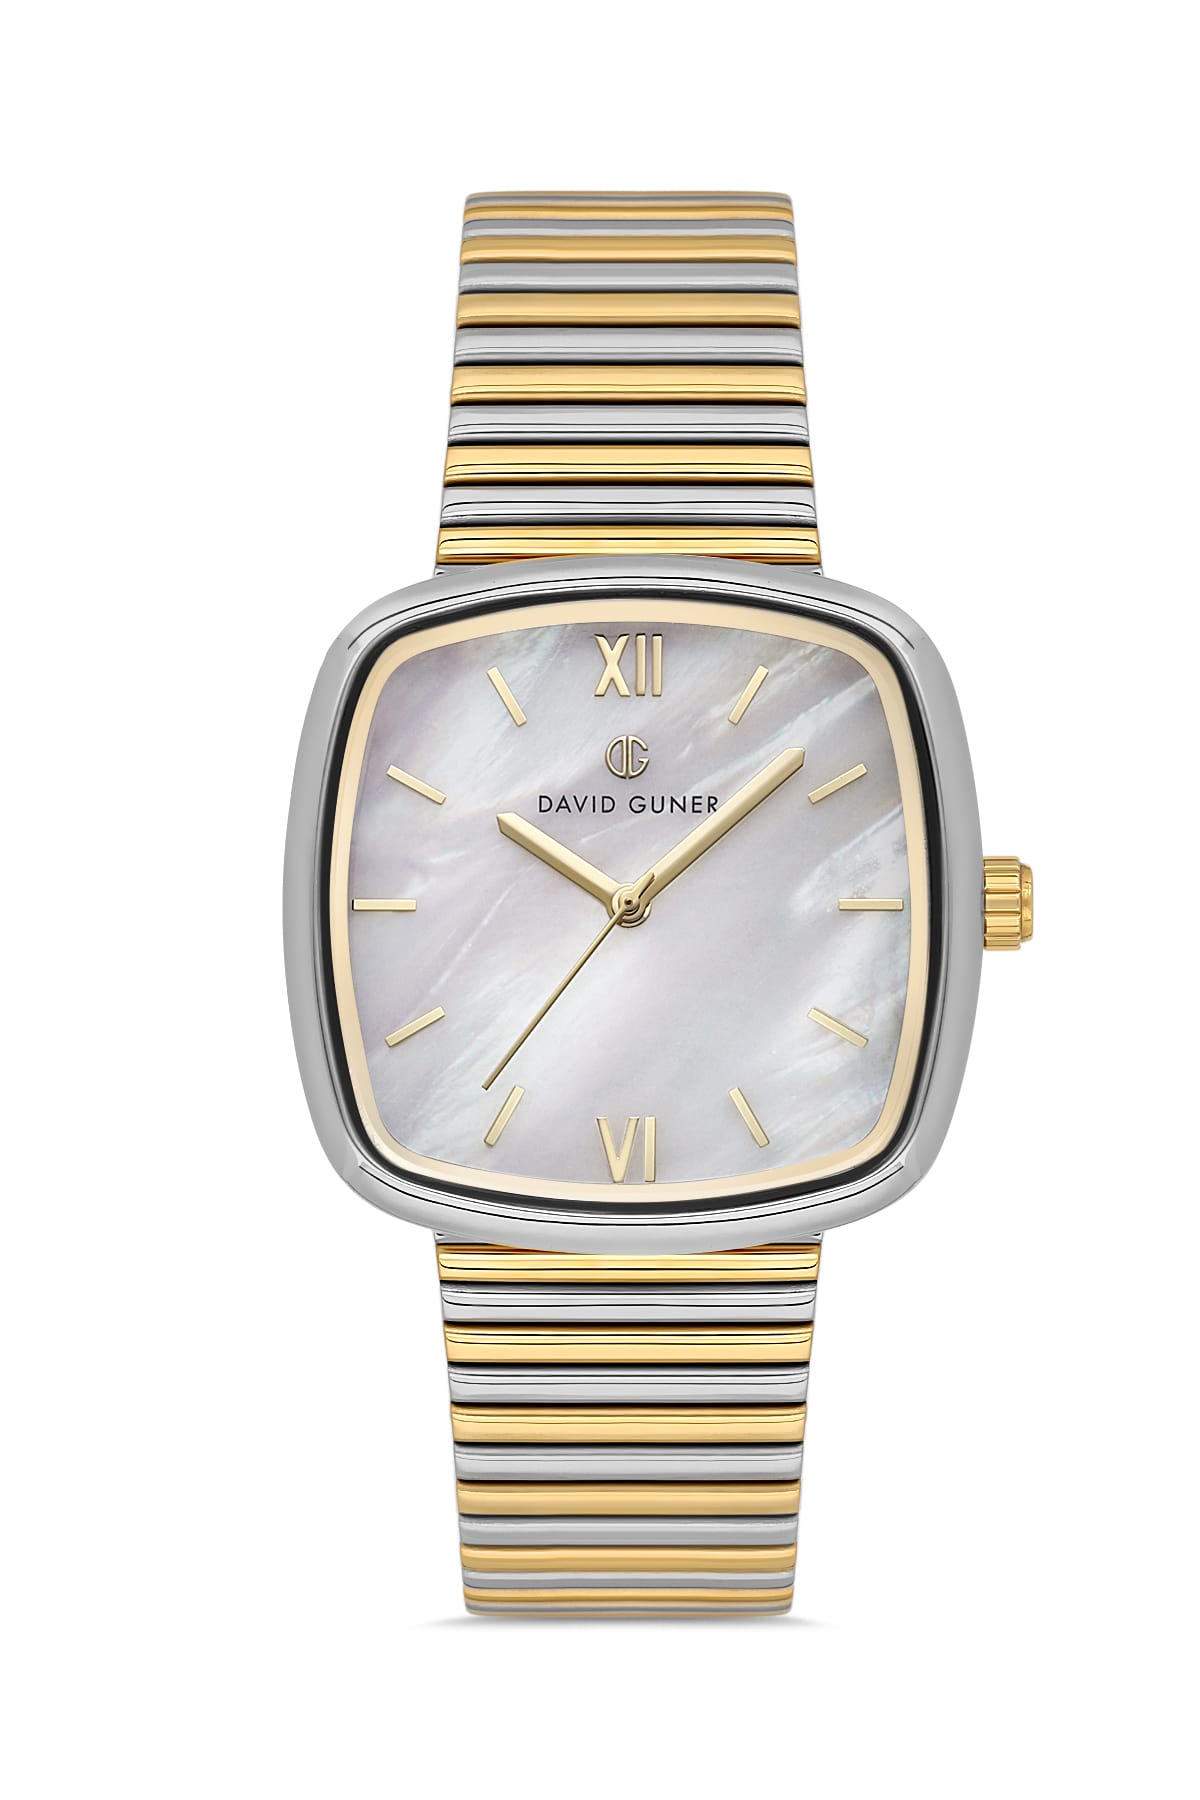 David Guner Silver Dial Yellow White Coated Women's Wristwatch